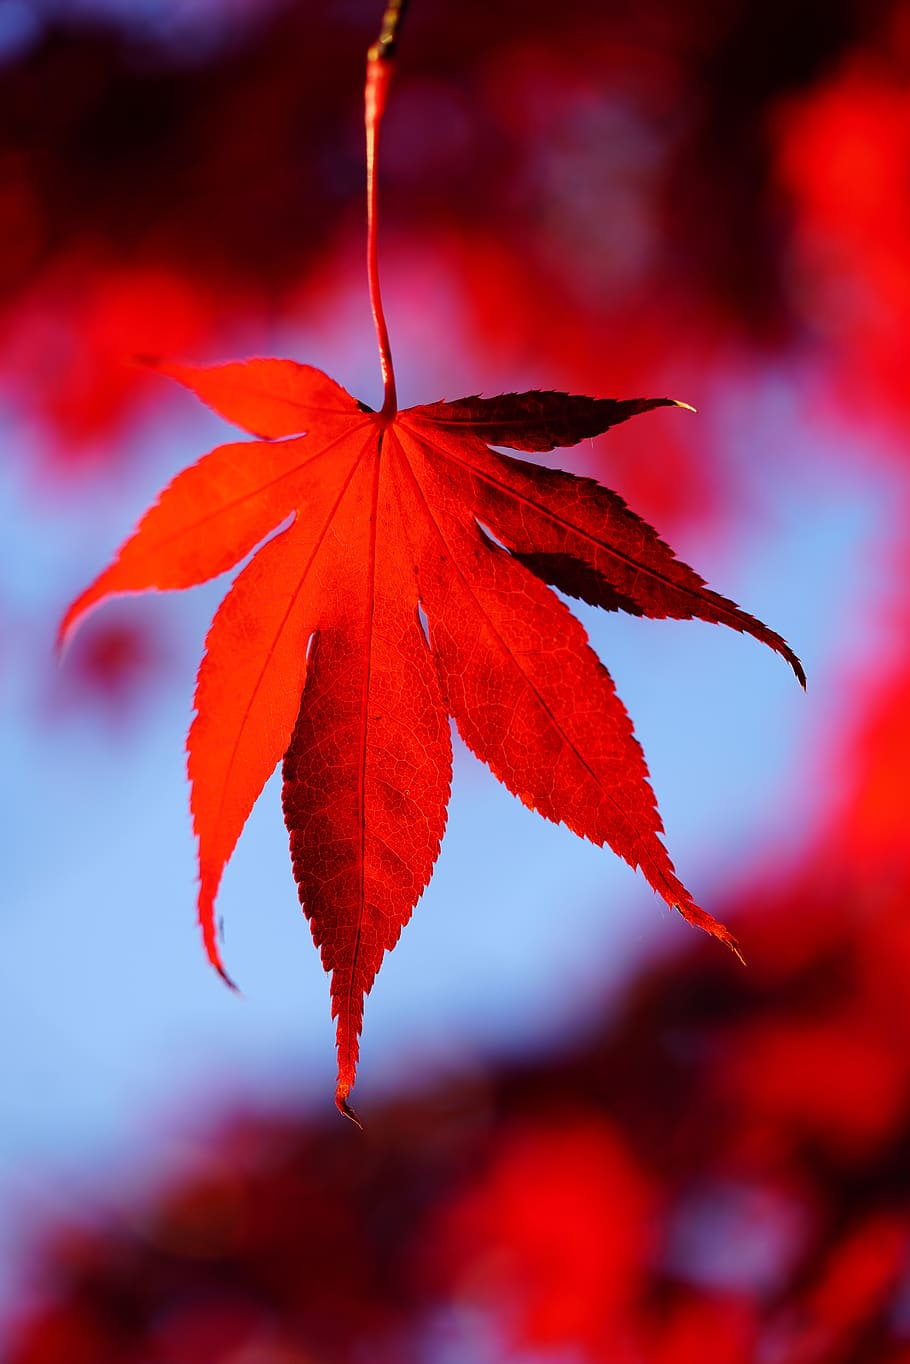 daun maple, daun, musim gugur, jatuh dedaunan, maple, cabang, oktober, warna gugur, daun gugur, warna musim gugur